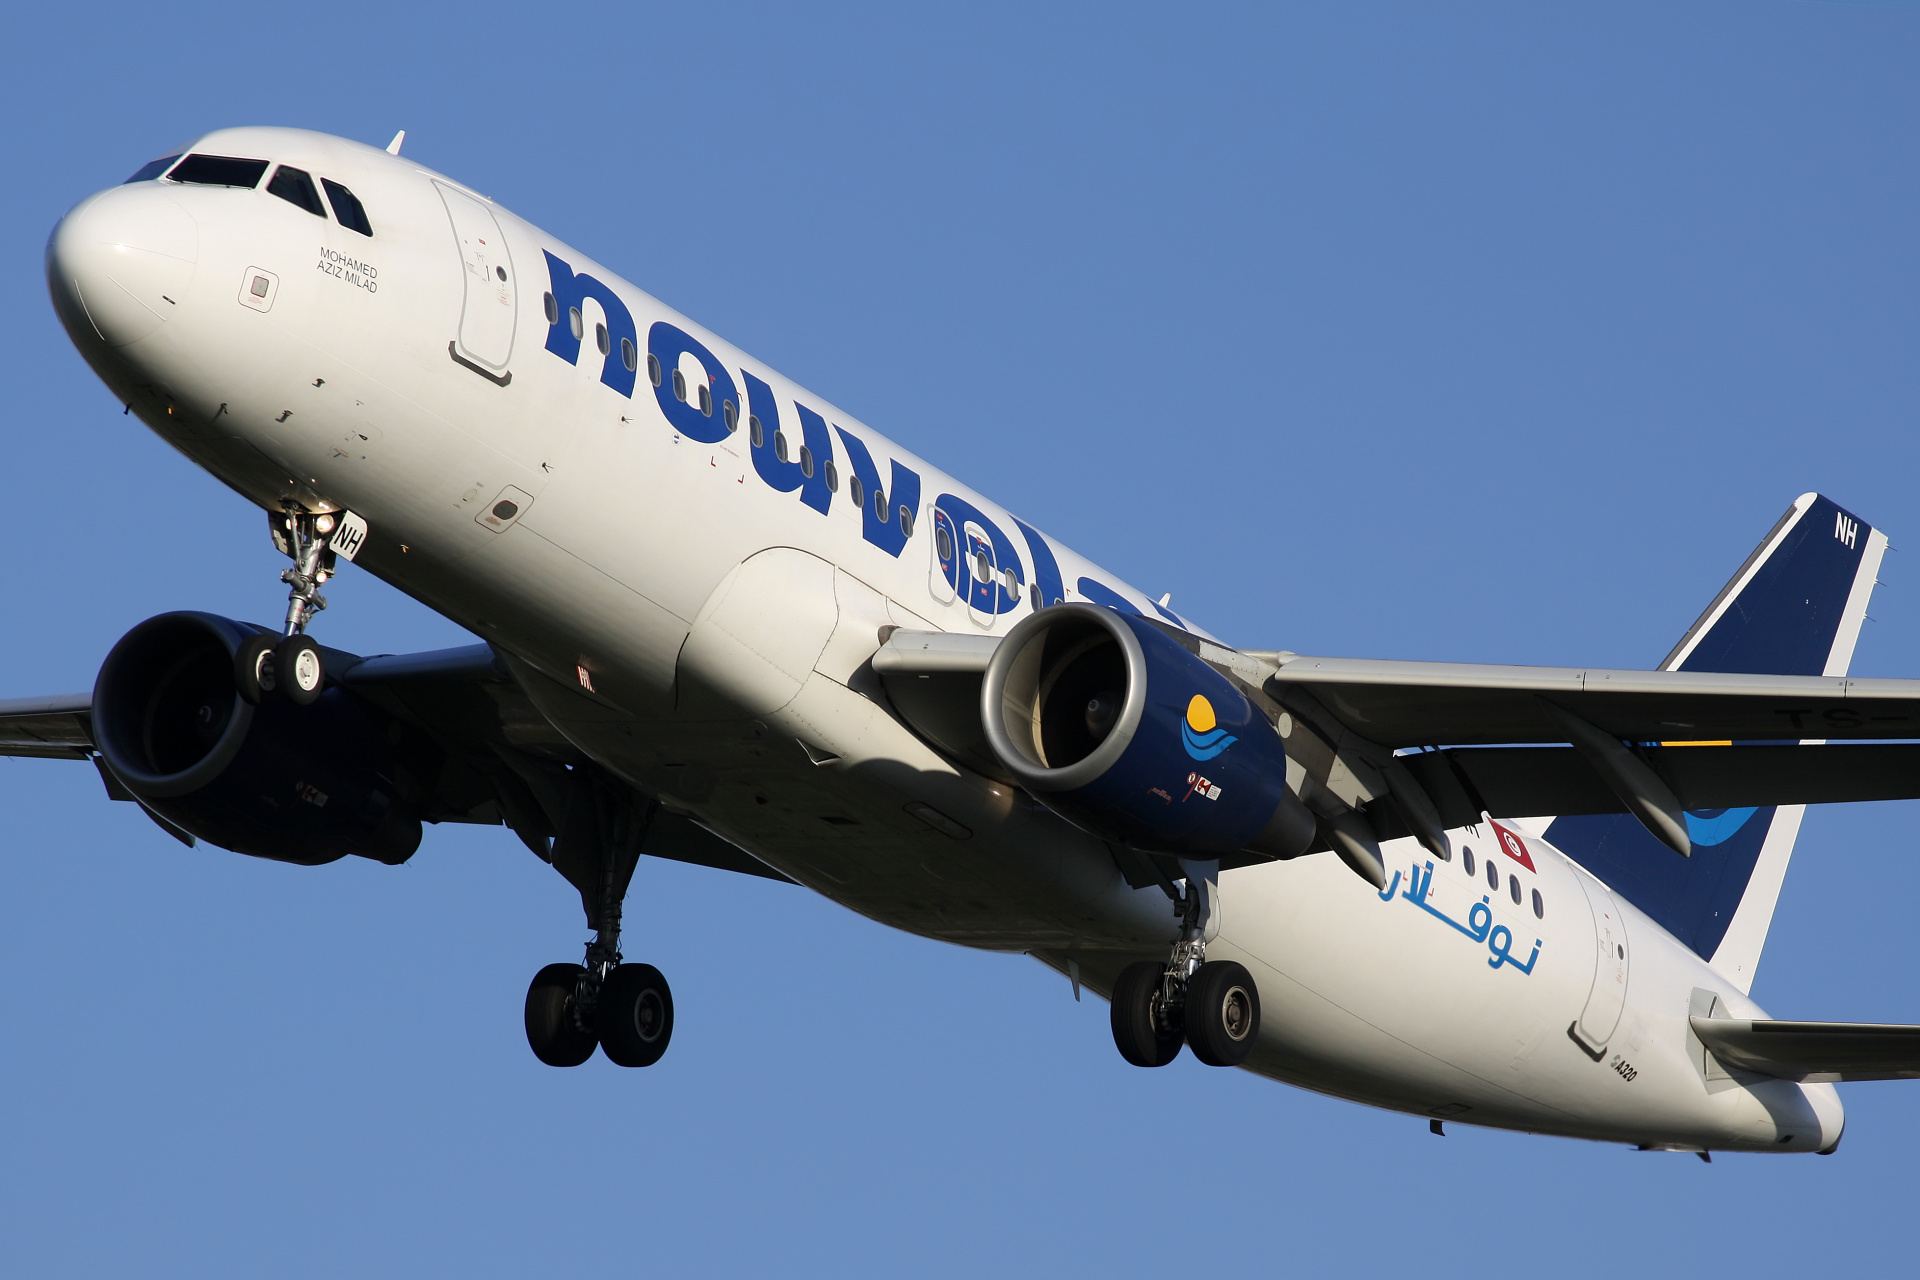 TS-INH (Aircraft » EPWA Spotting » Airbus A320-200 » Nouvelair)